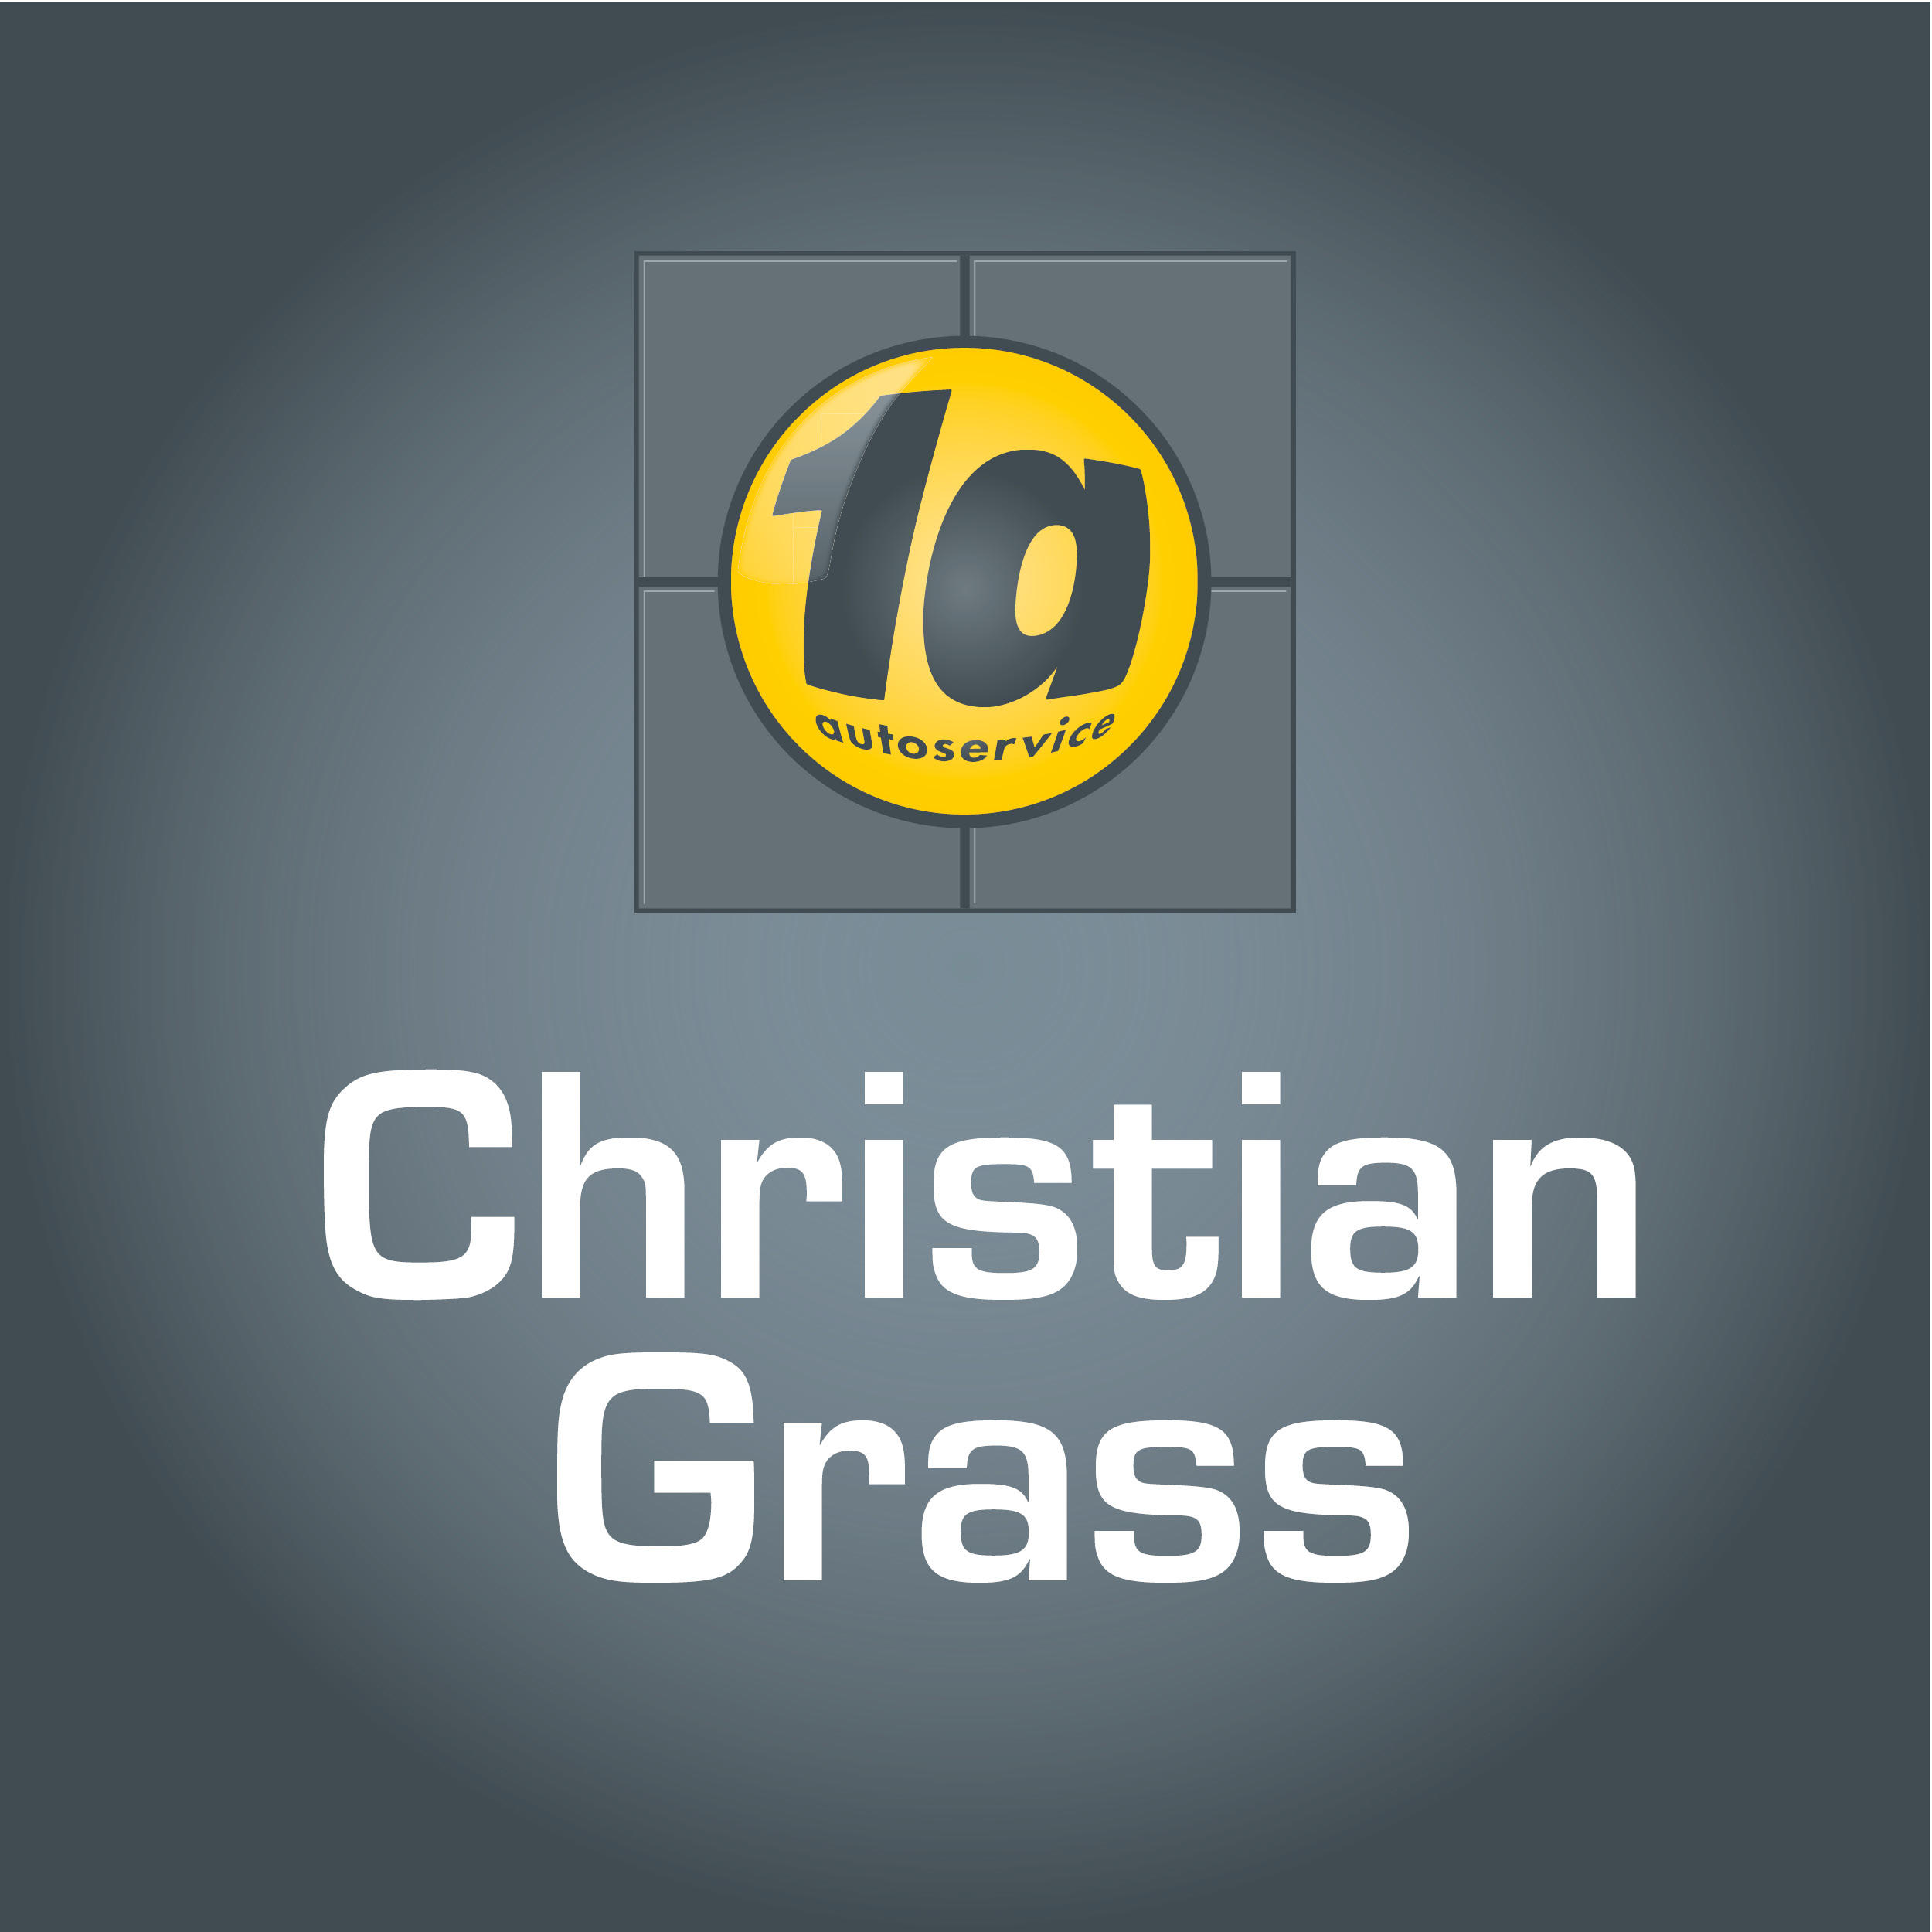 1a autoservice Christian Grass + Aral Tanktelle  